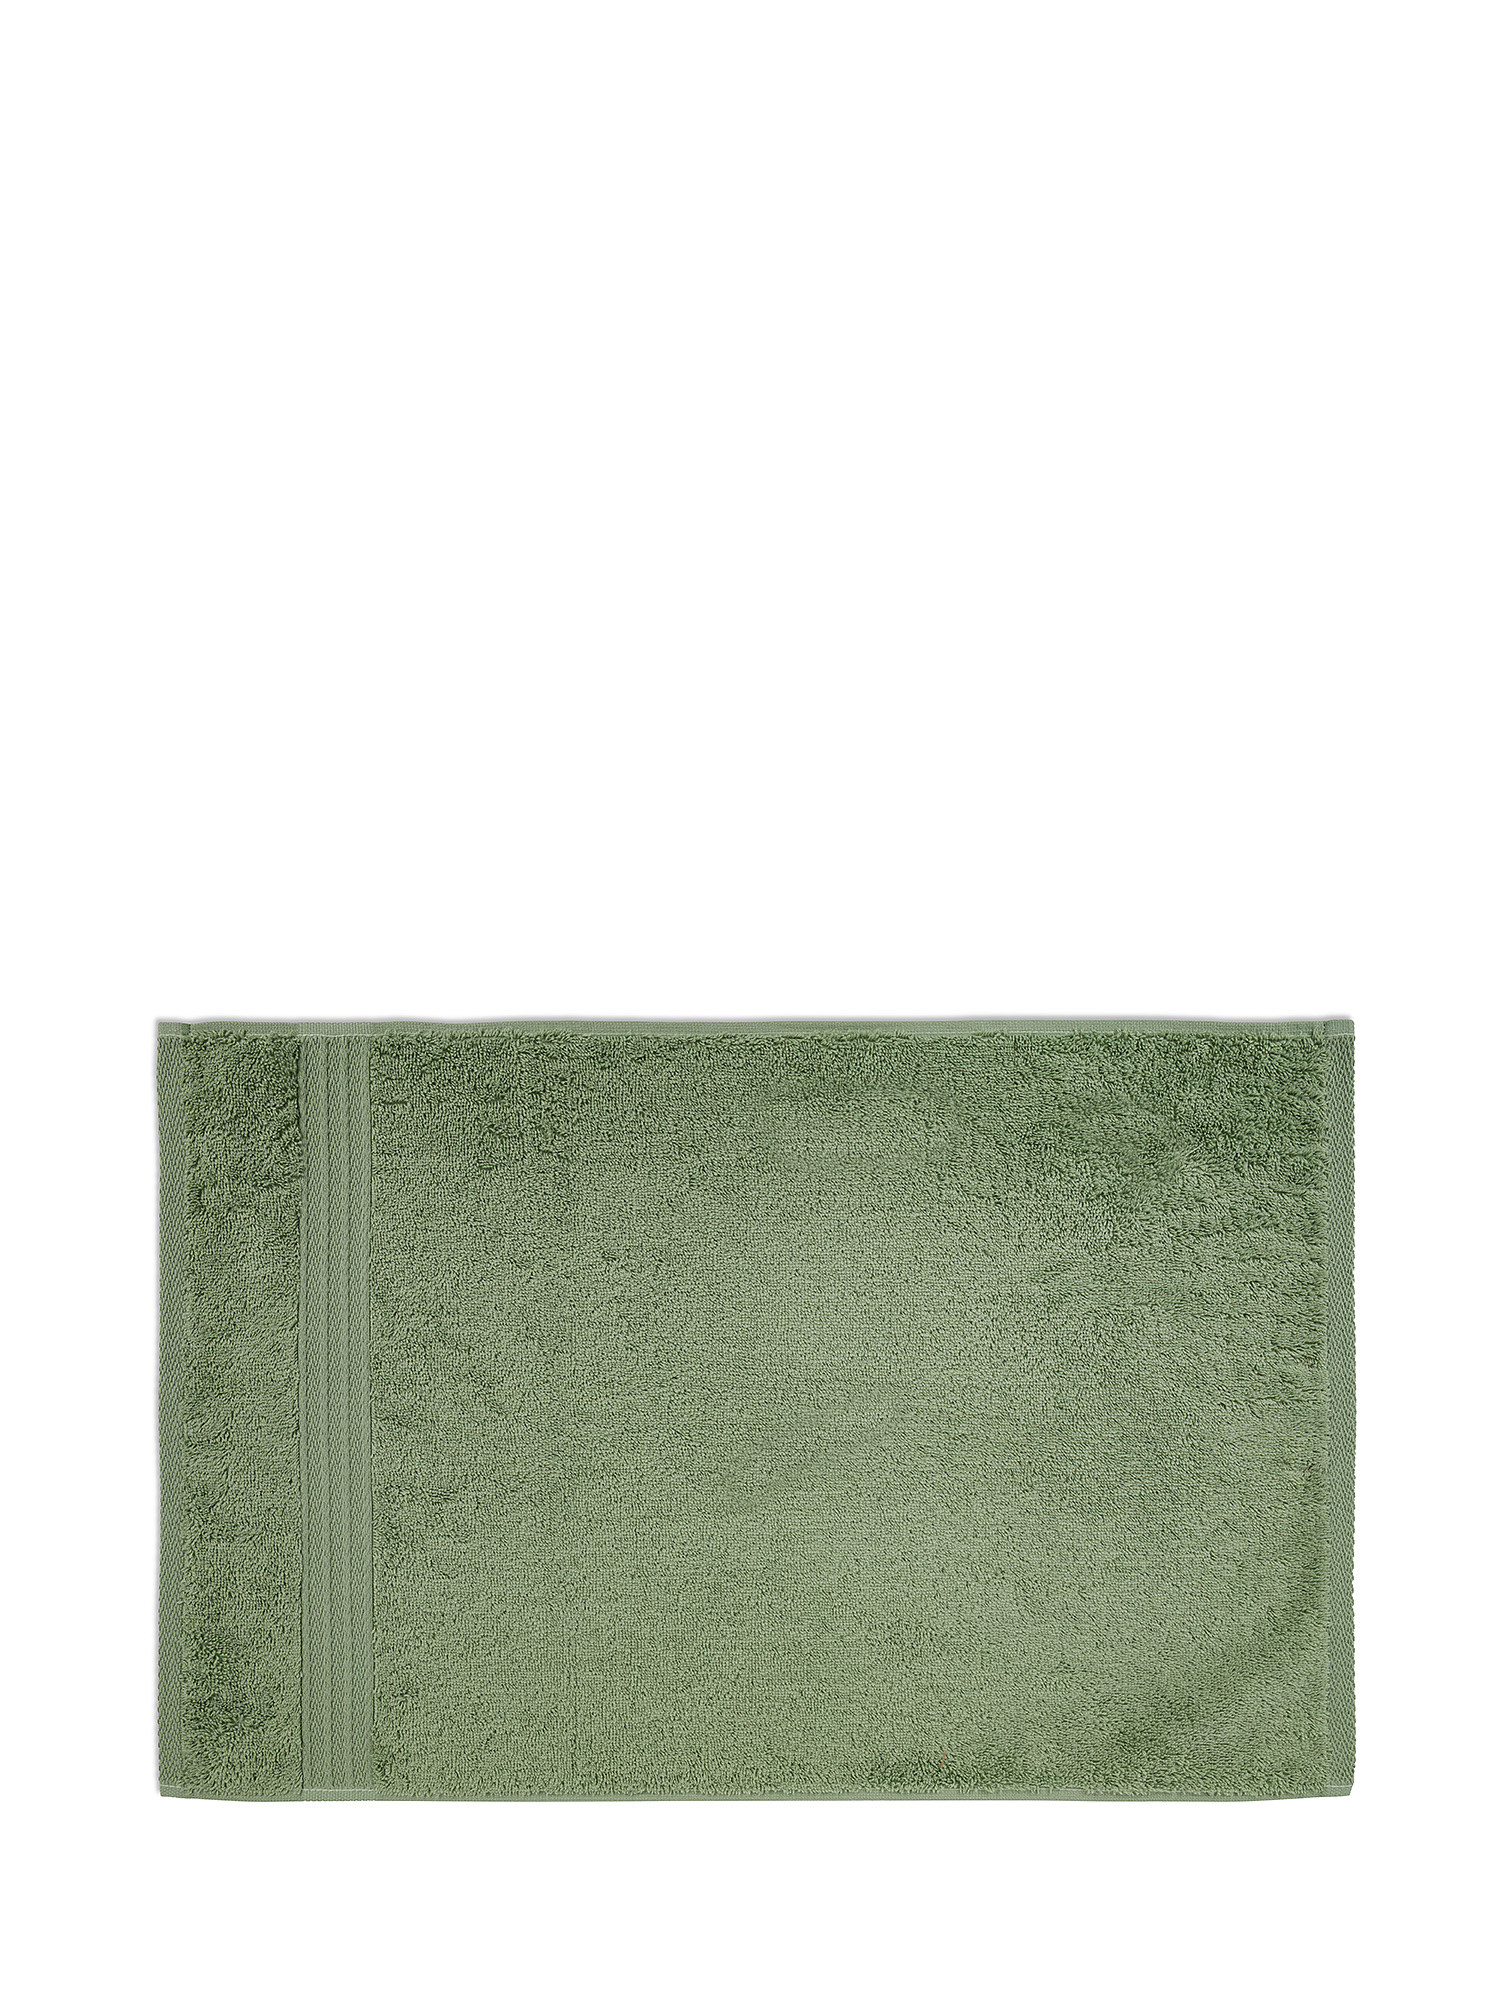 Asciugamano puro cotone tinta unita Zefiro, Verde salvia, large image number 1